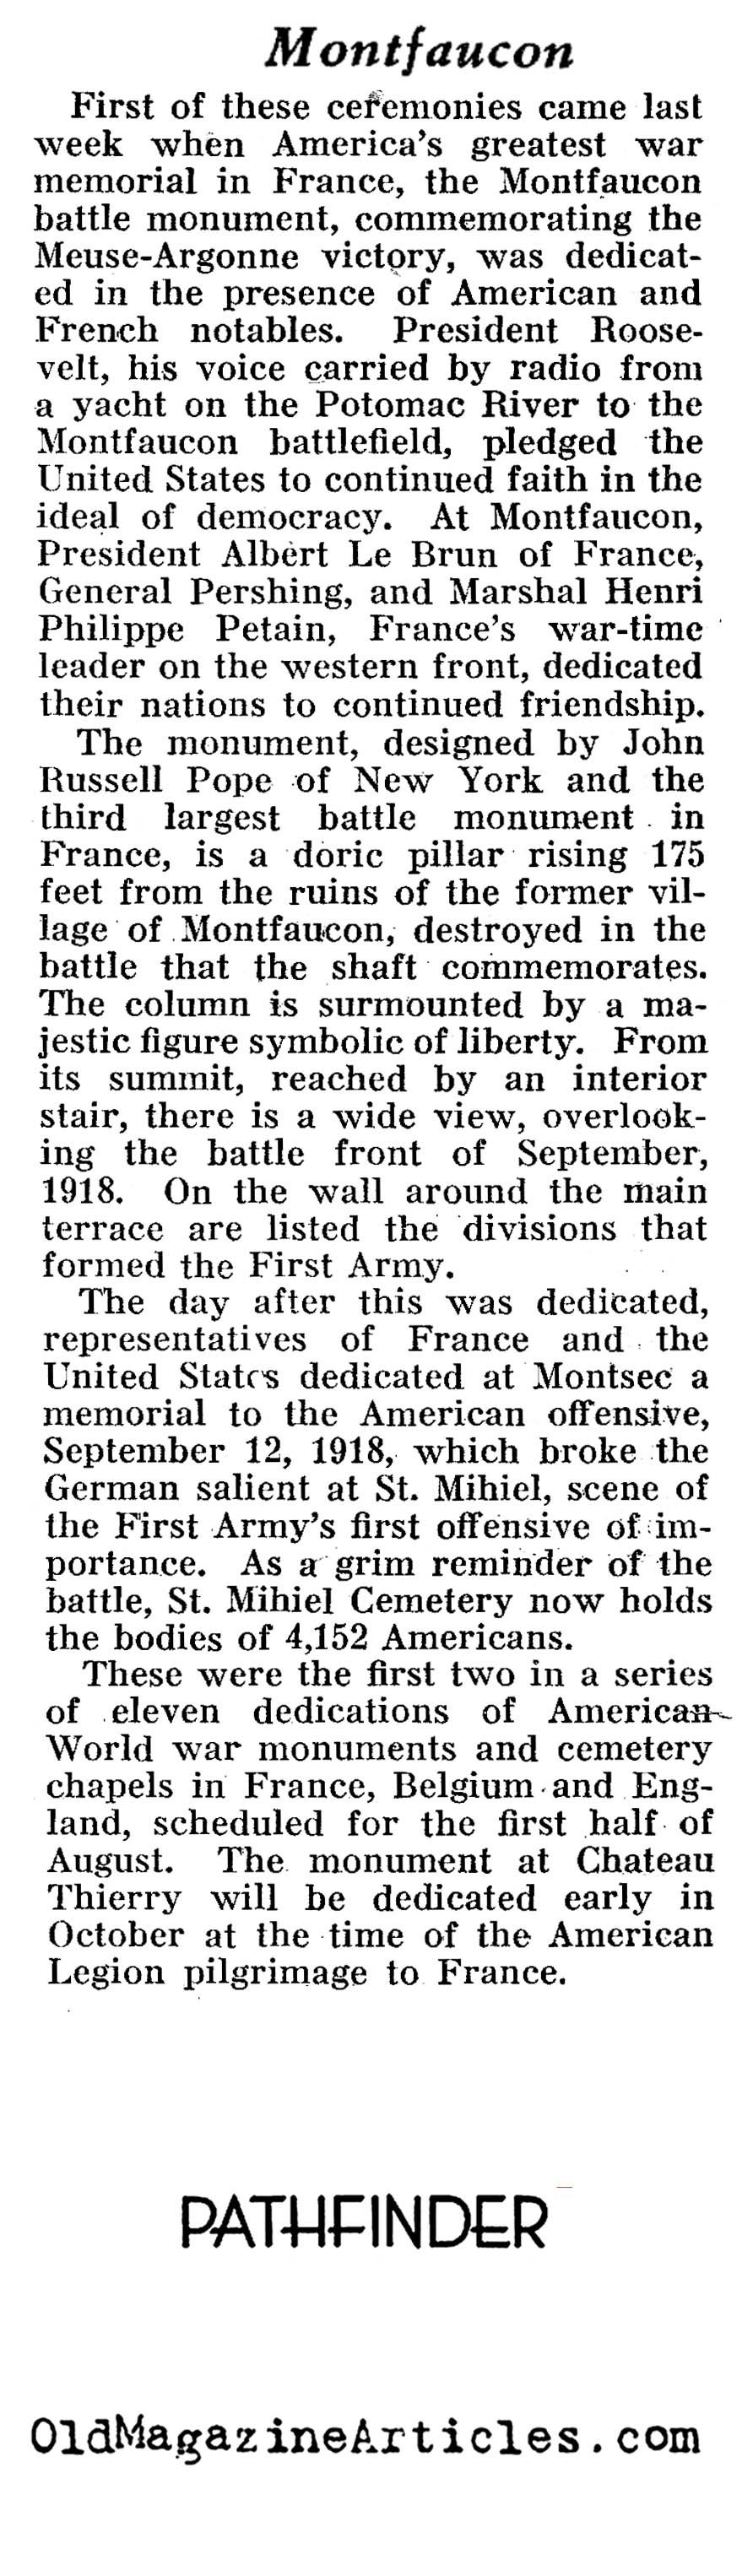 The Monument at Montfaucon (Pathfinder Magazine, 1937)